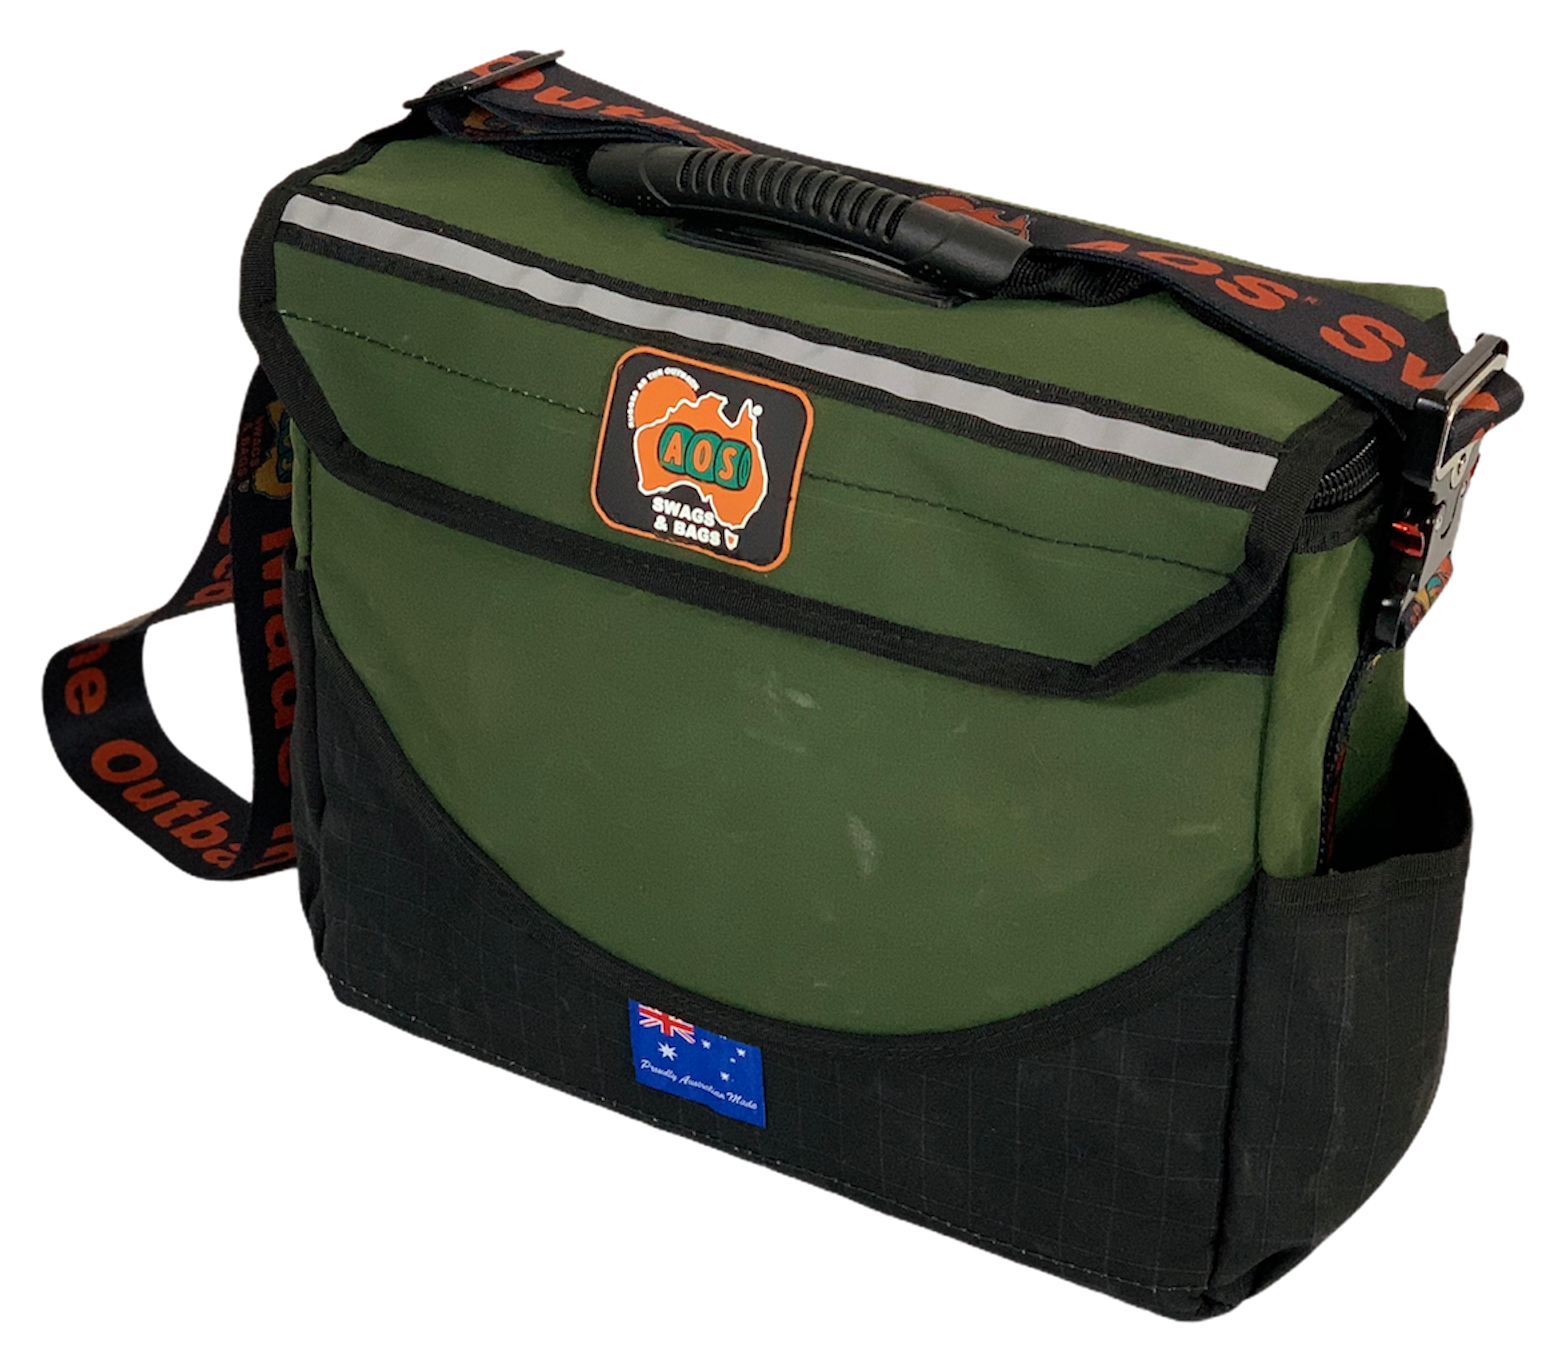 AOS Australian Made Deluxe Canvas Tool Bag, Triple Layer Base, Lockable,  Grab Handle, Adjustable Shoulder Strap, Metal Buckle - Small - Green/Black